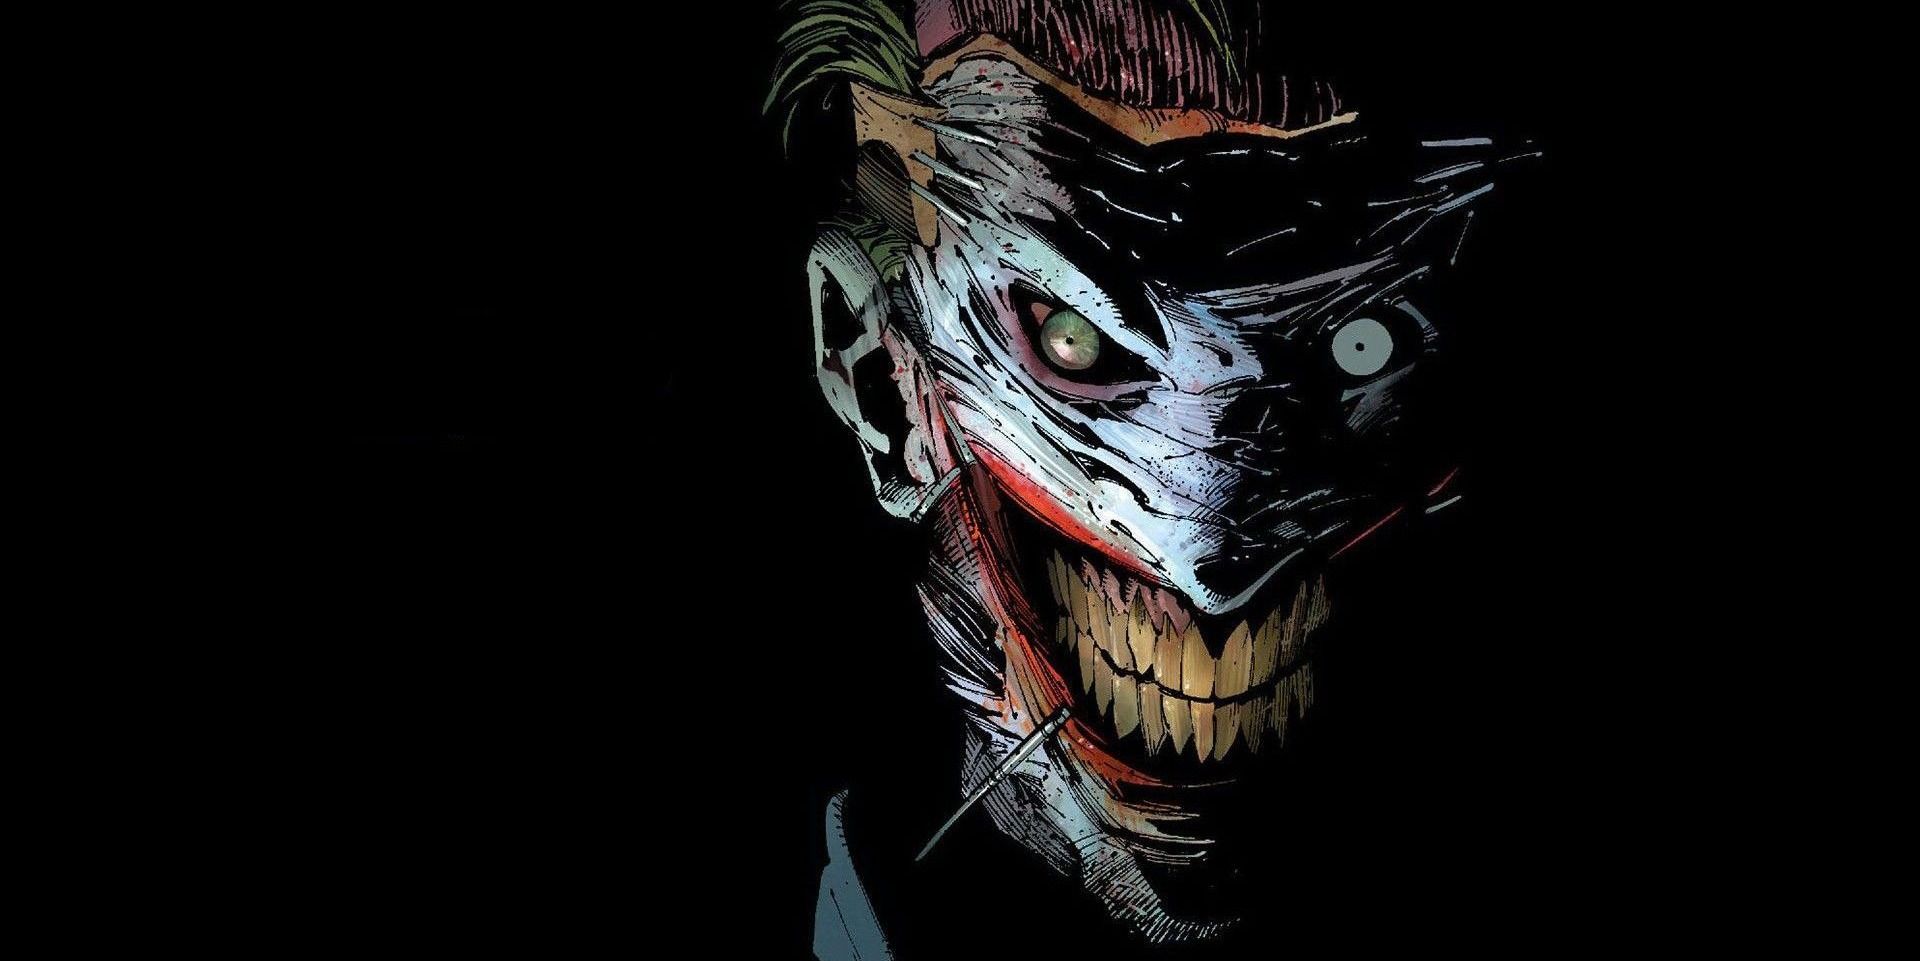 Joker: 10 Iconic Comic Book Moments We Want To See Joaquin Phoenix Portray